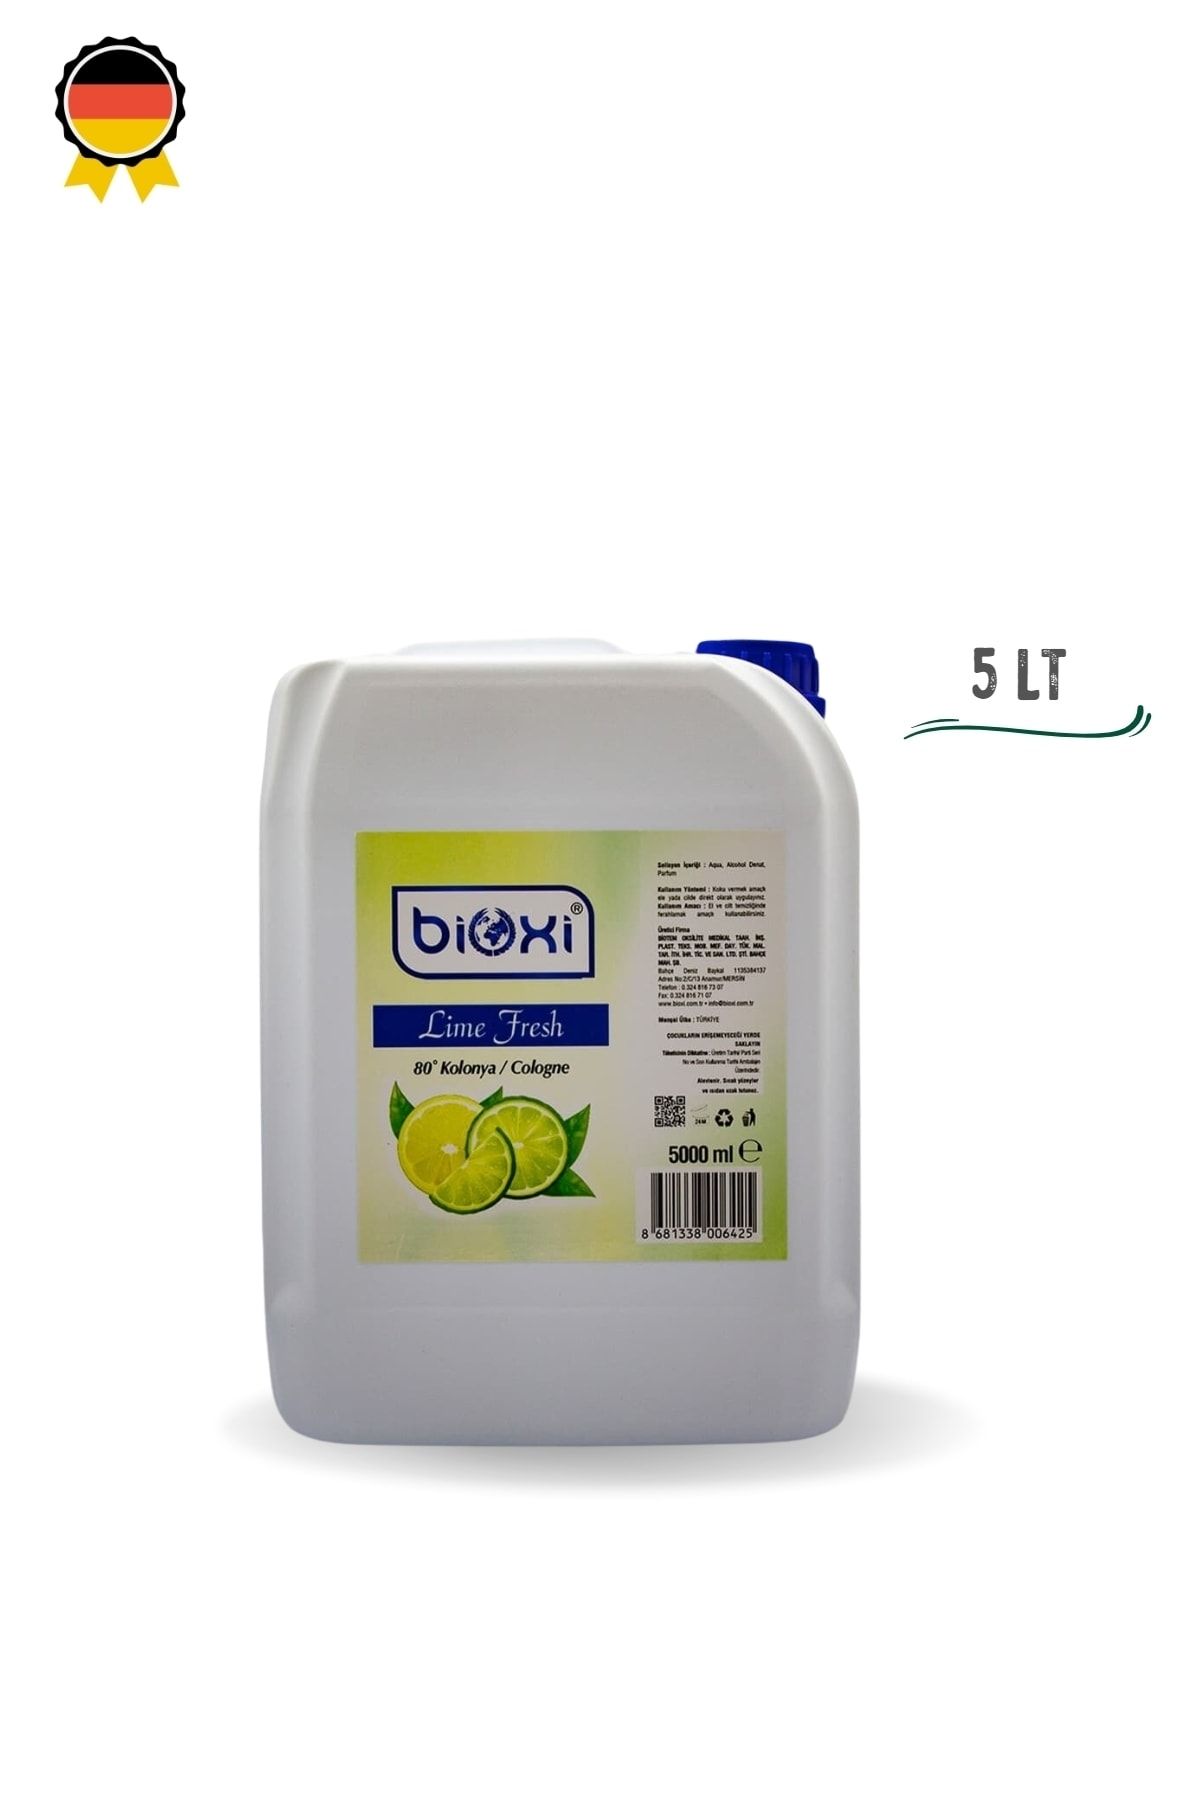 Bioxi ® Lime Fresh 80° Alkollü Kolonya 5 Lt